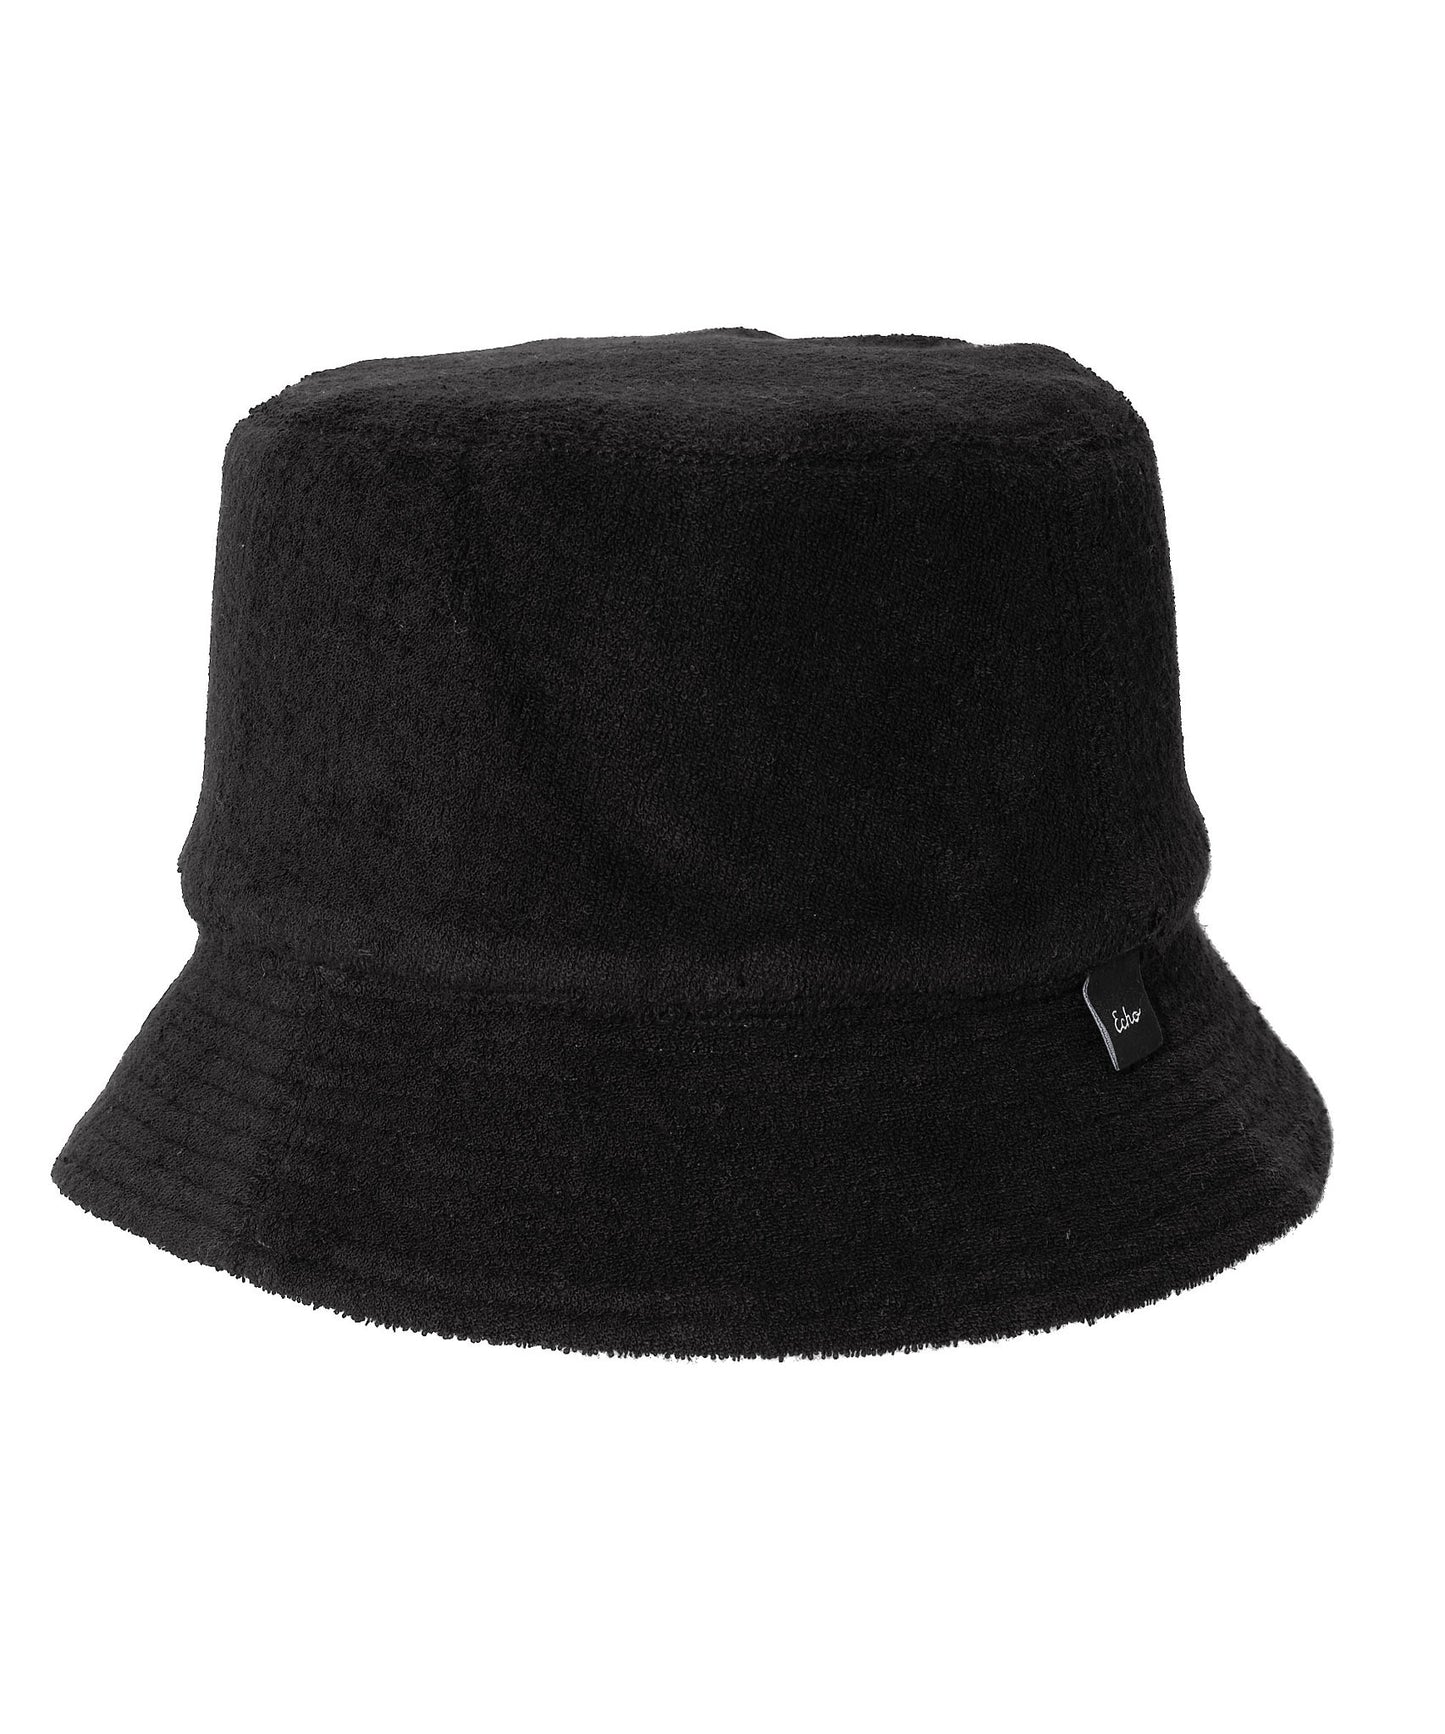 Reversible Terry Bucket Hat in color Black